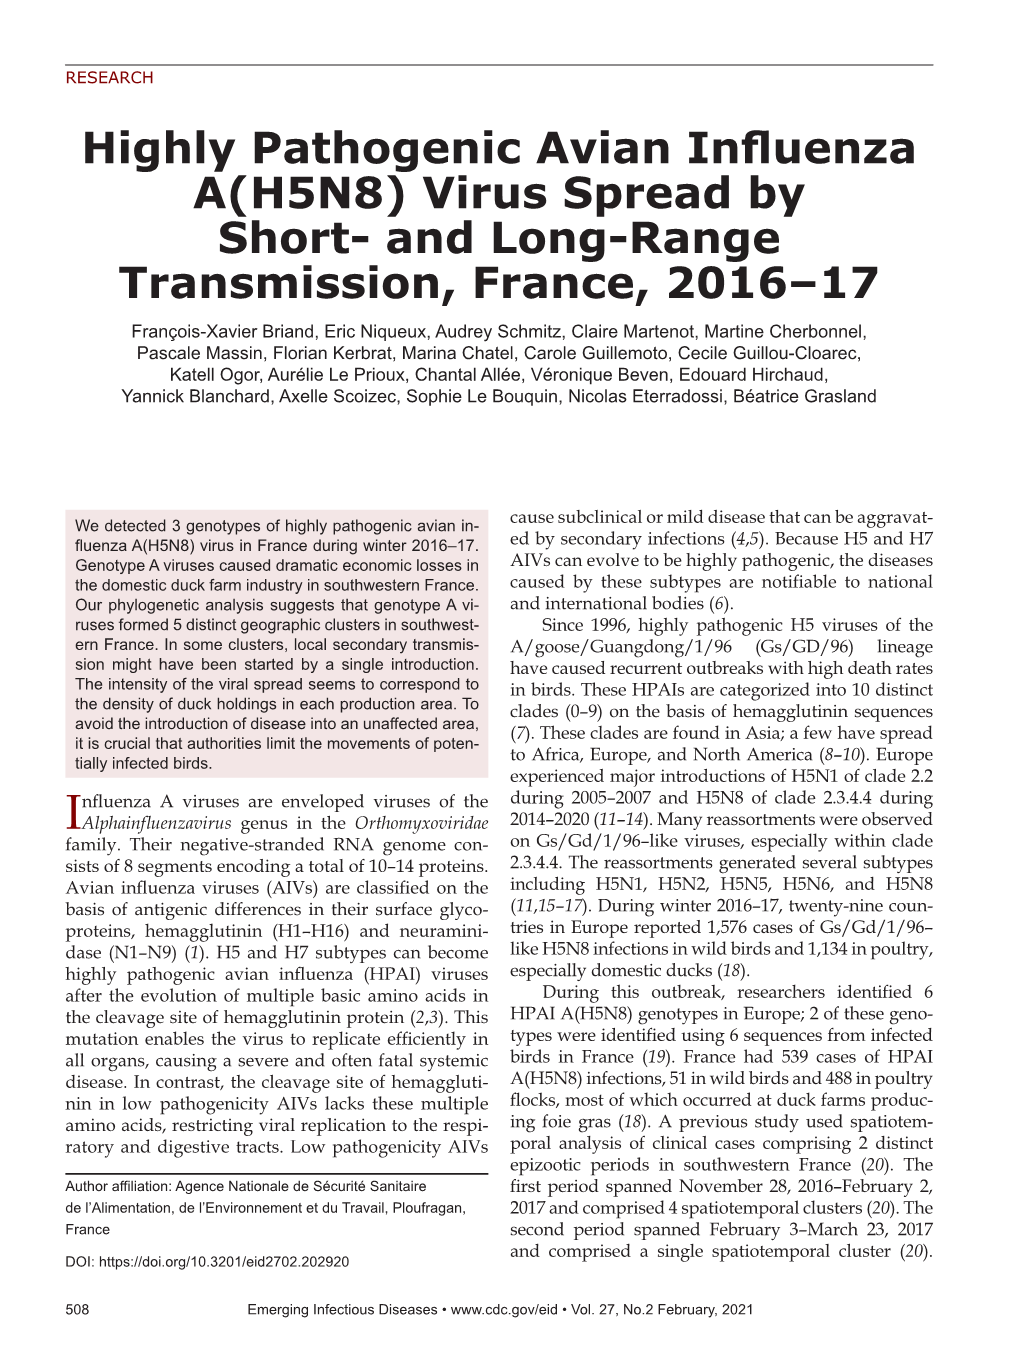 Highly Pathogenic Avian Influenza A(H5N8)